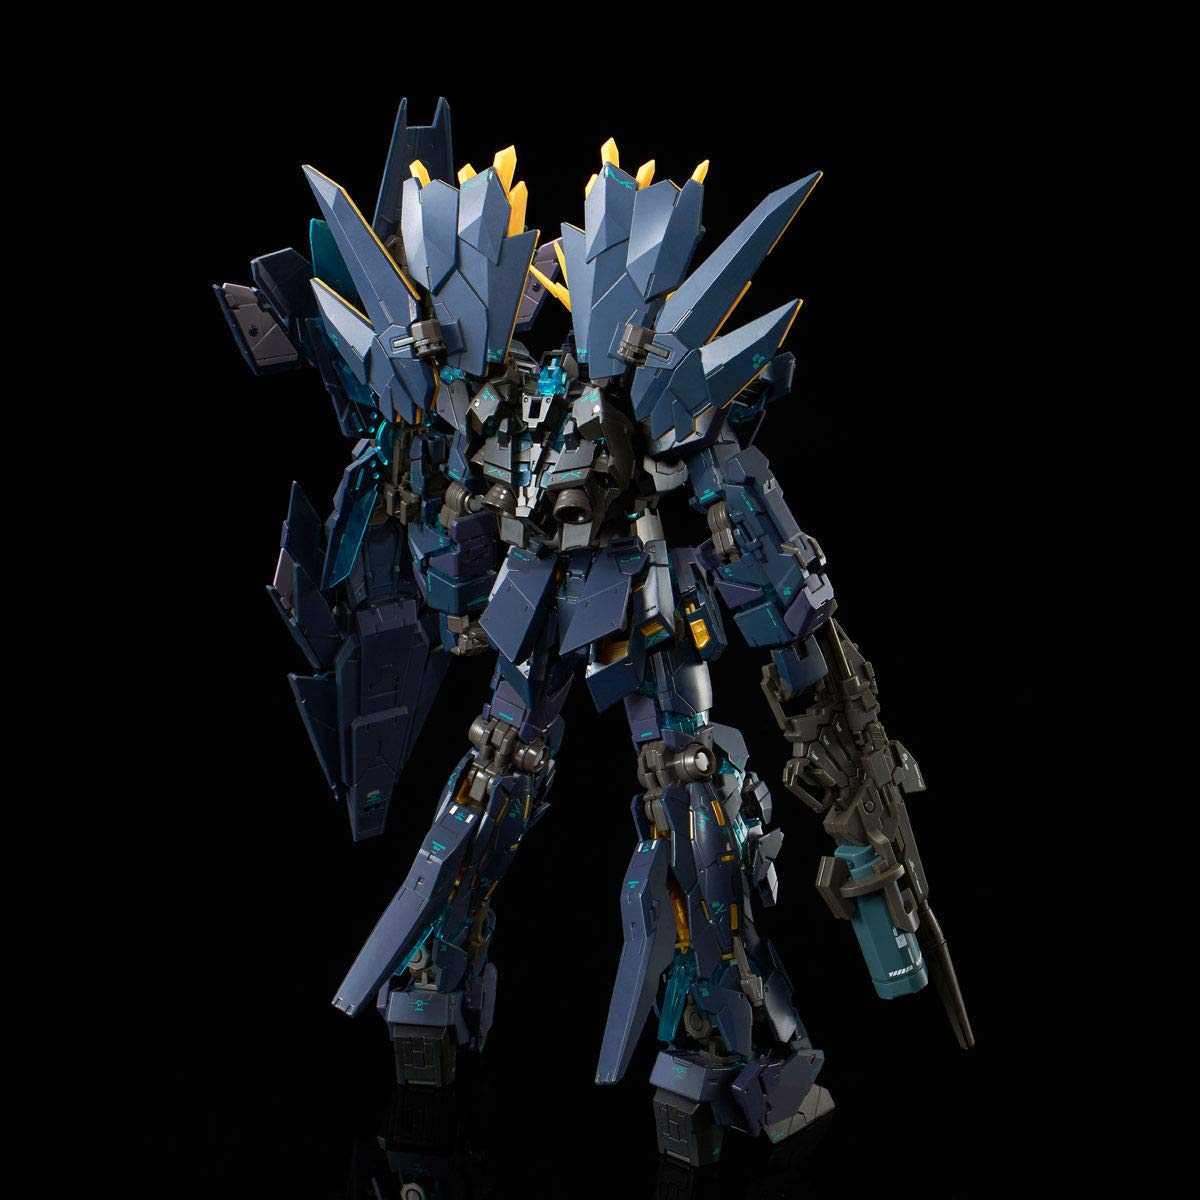 1w Delv Bandai RG 1/144 Unicorn 02 Banshee Norn Gundam UC Model Kit for sale online 